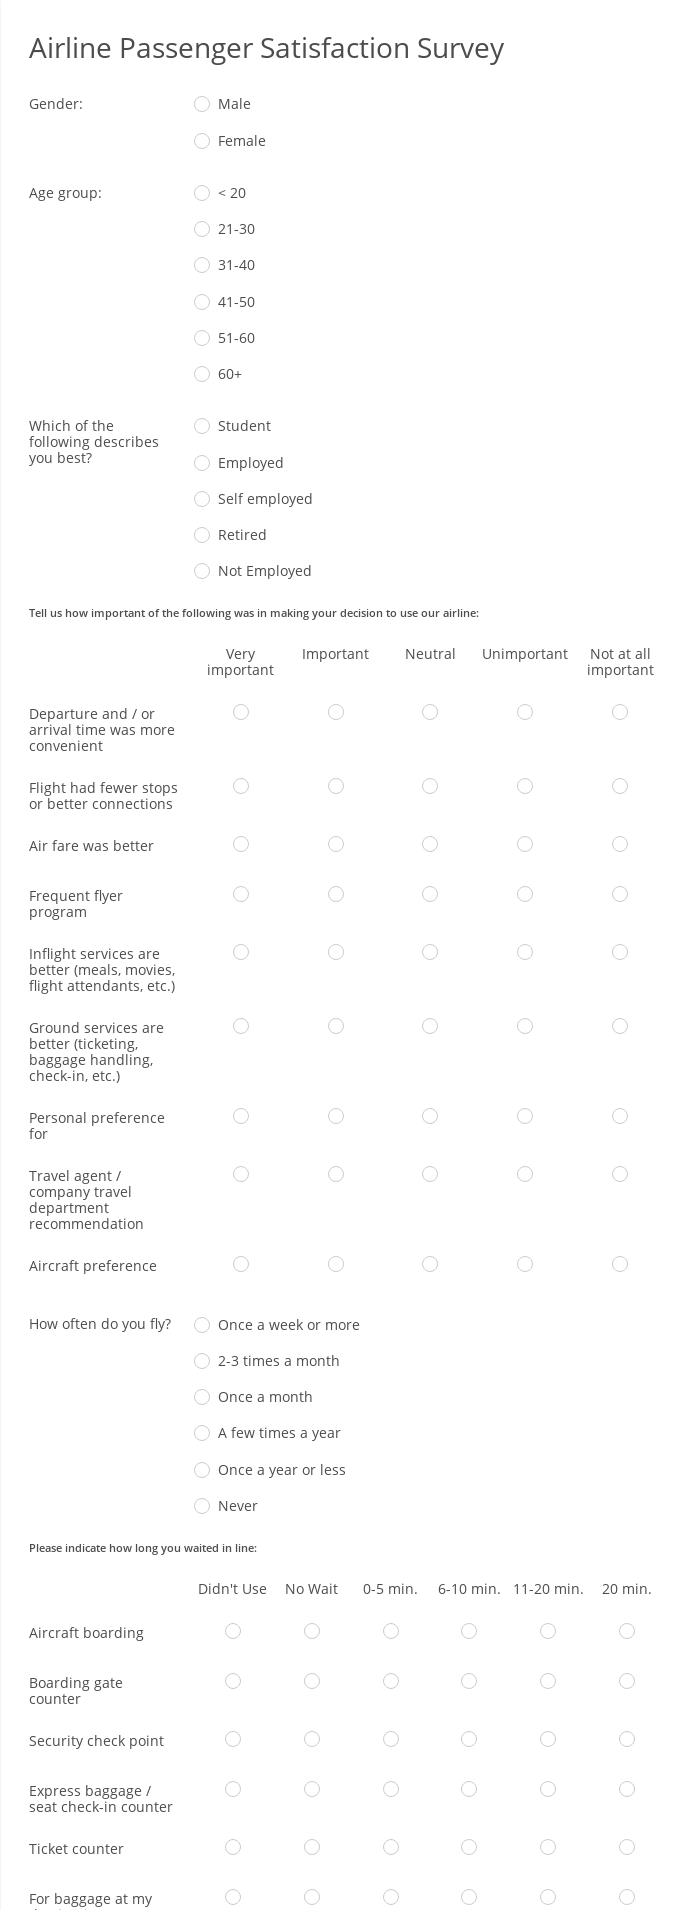 Airline Passenger Satisfaction Survey